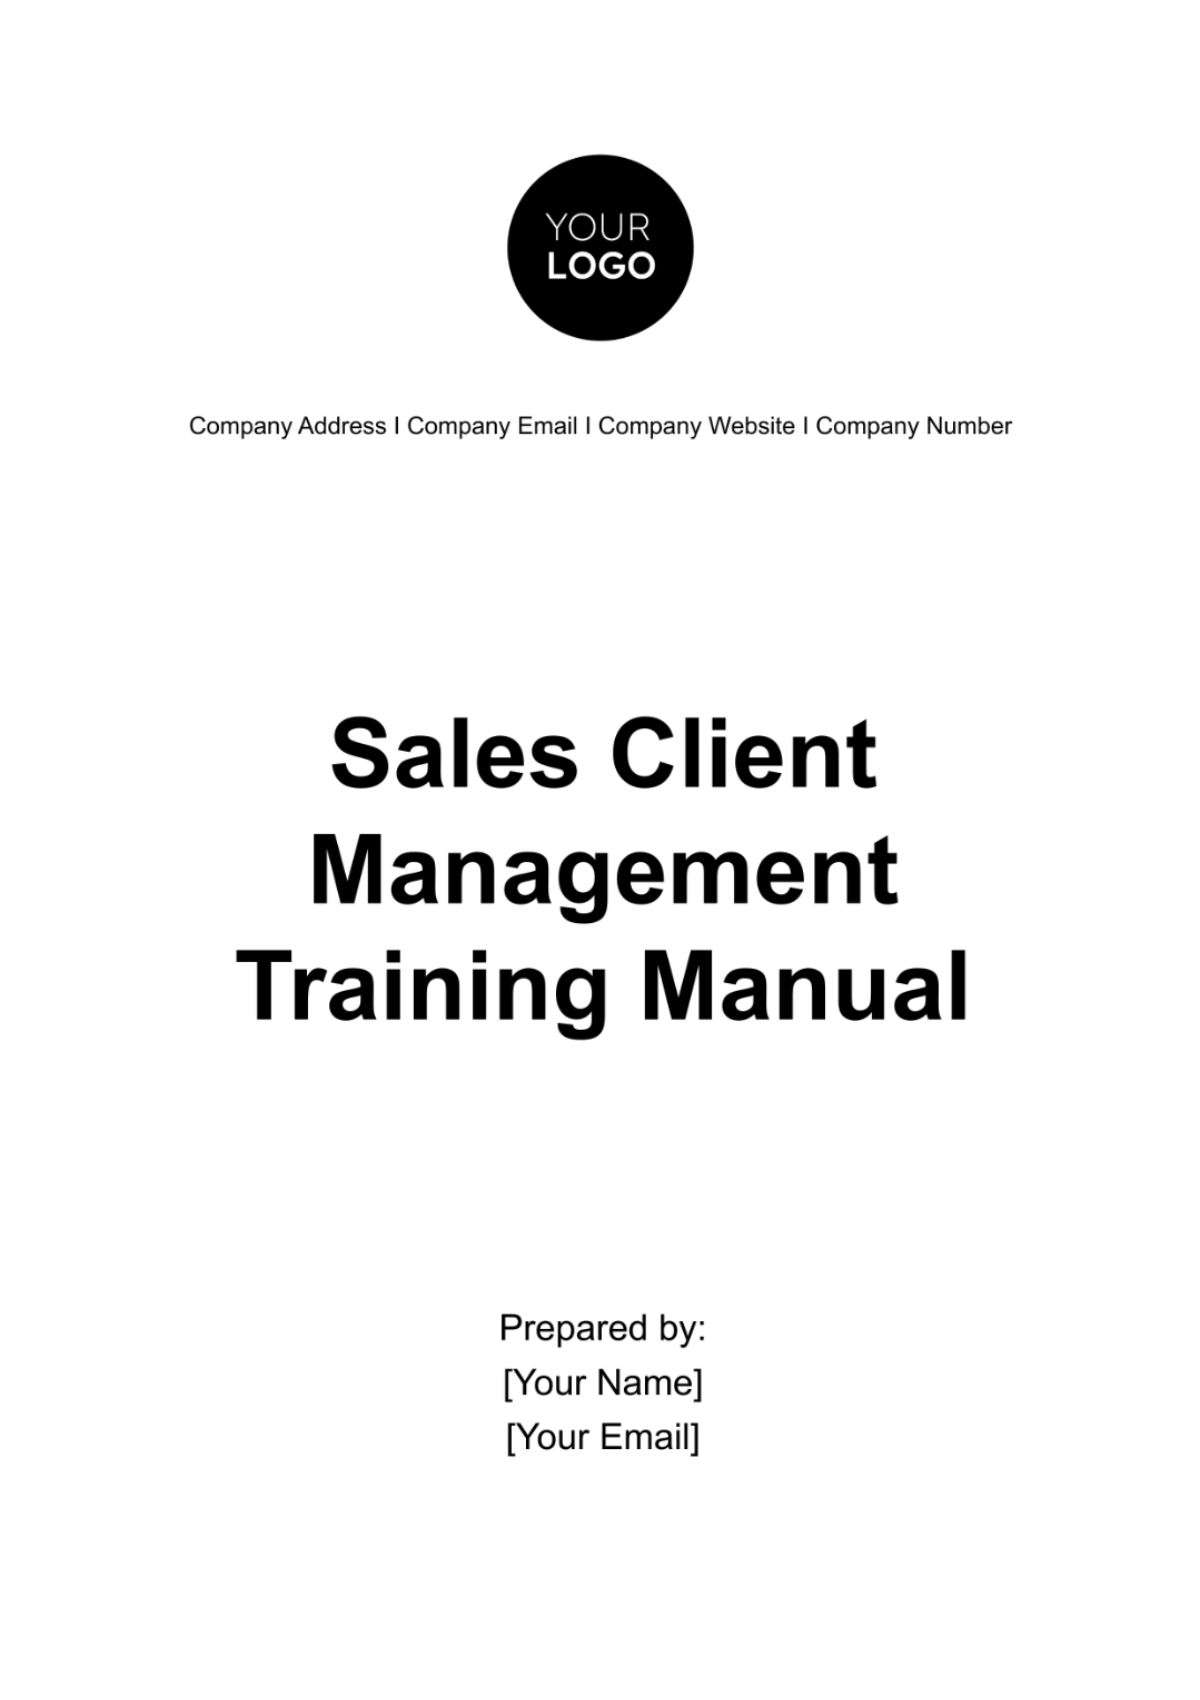 Sales Client Management Training Manual Template